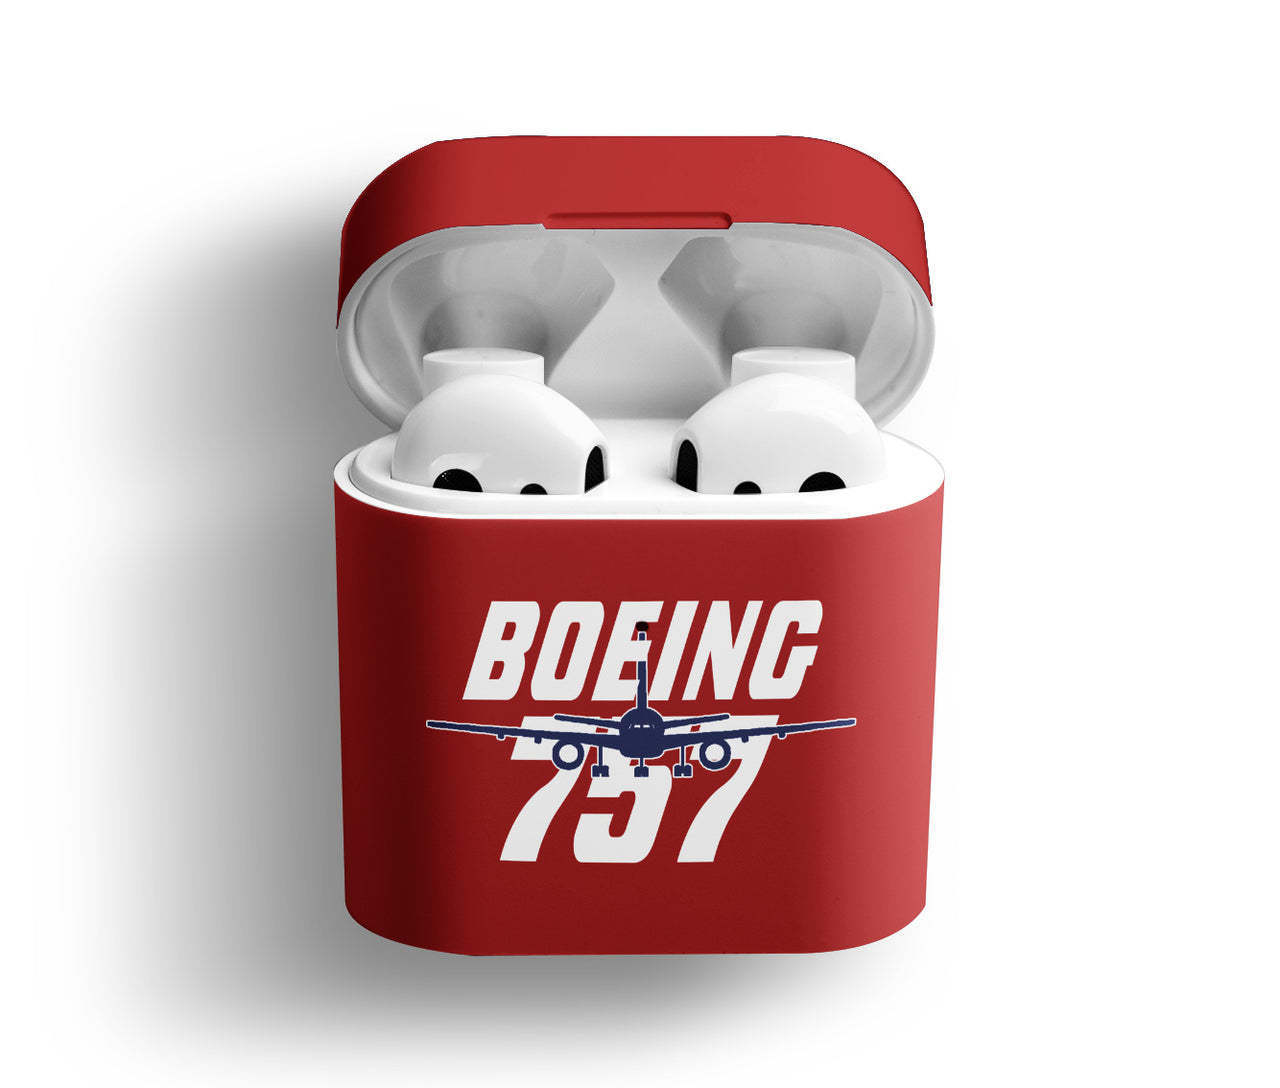 Amazing Boeing 757 Designed AirPods Cases